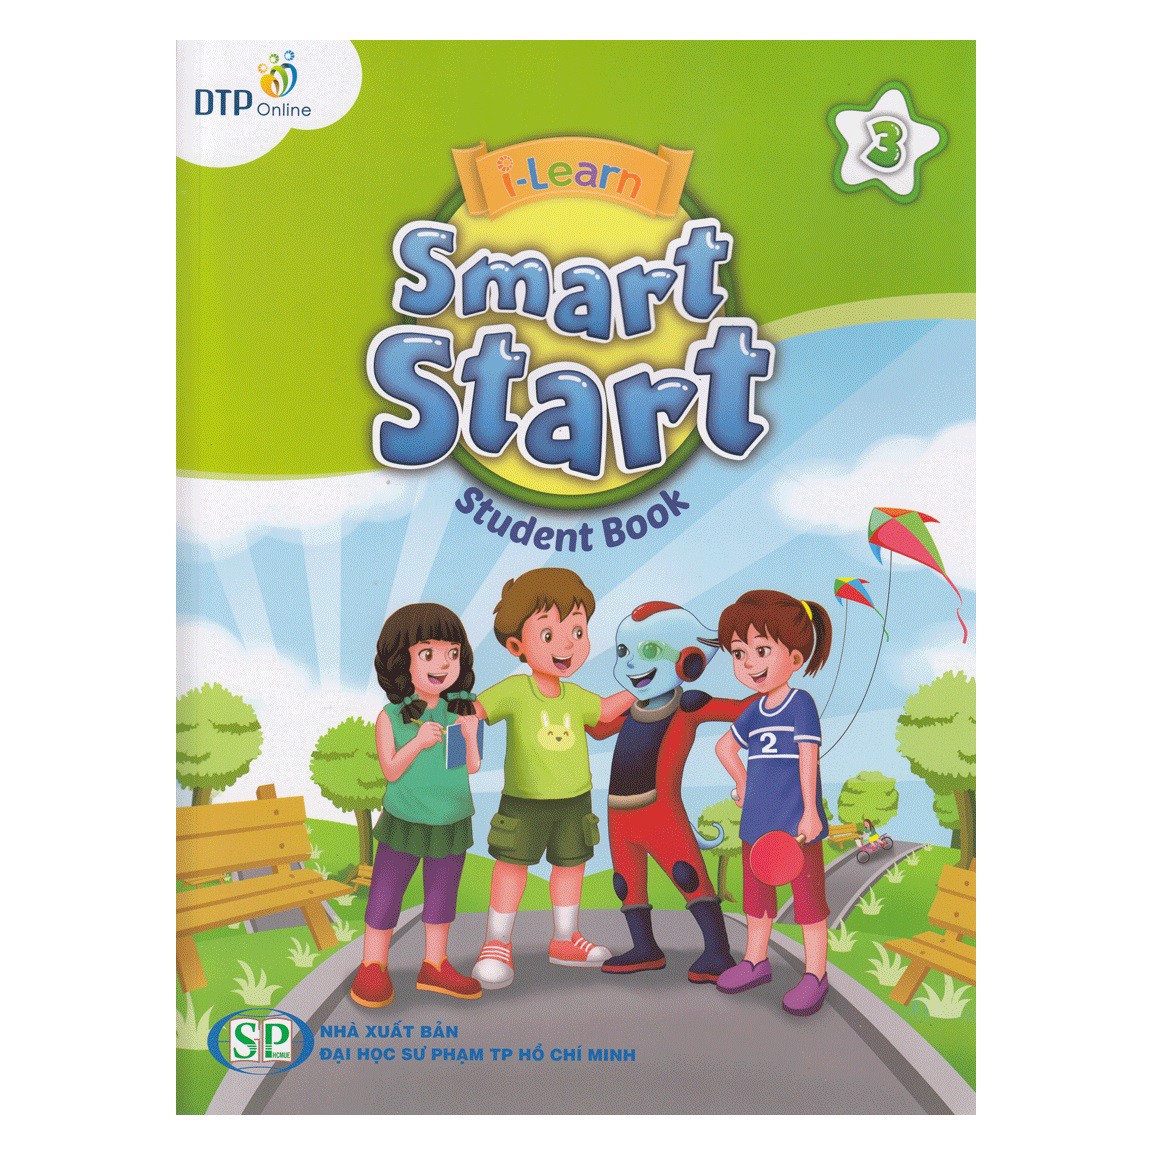 I-Learn Smart Start Student Book - Tập 3